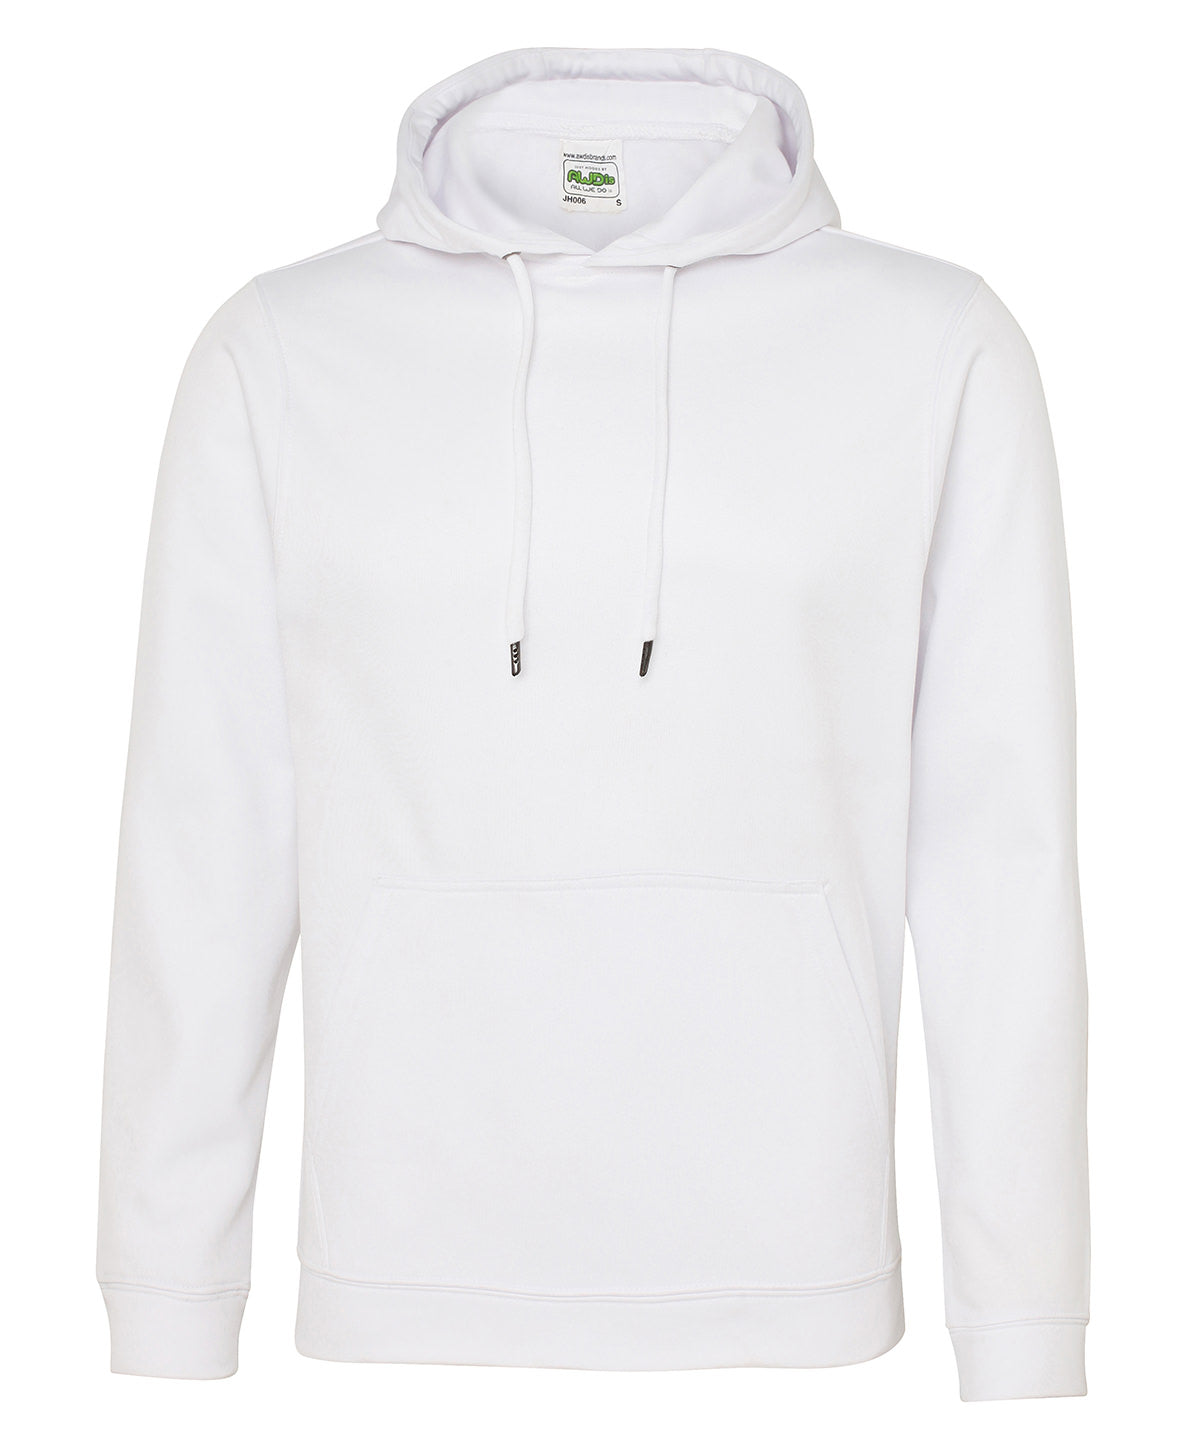 Personalised Hoodies - White AWDis Just Hoods Sports polyester hoodie